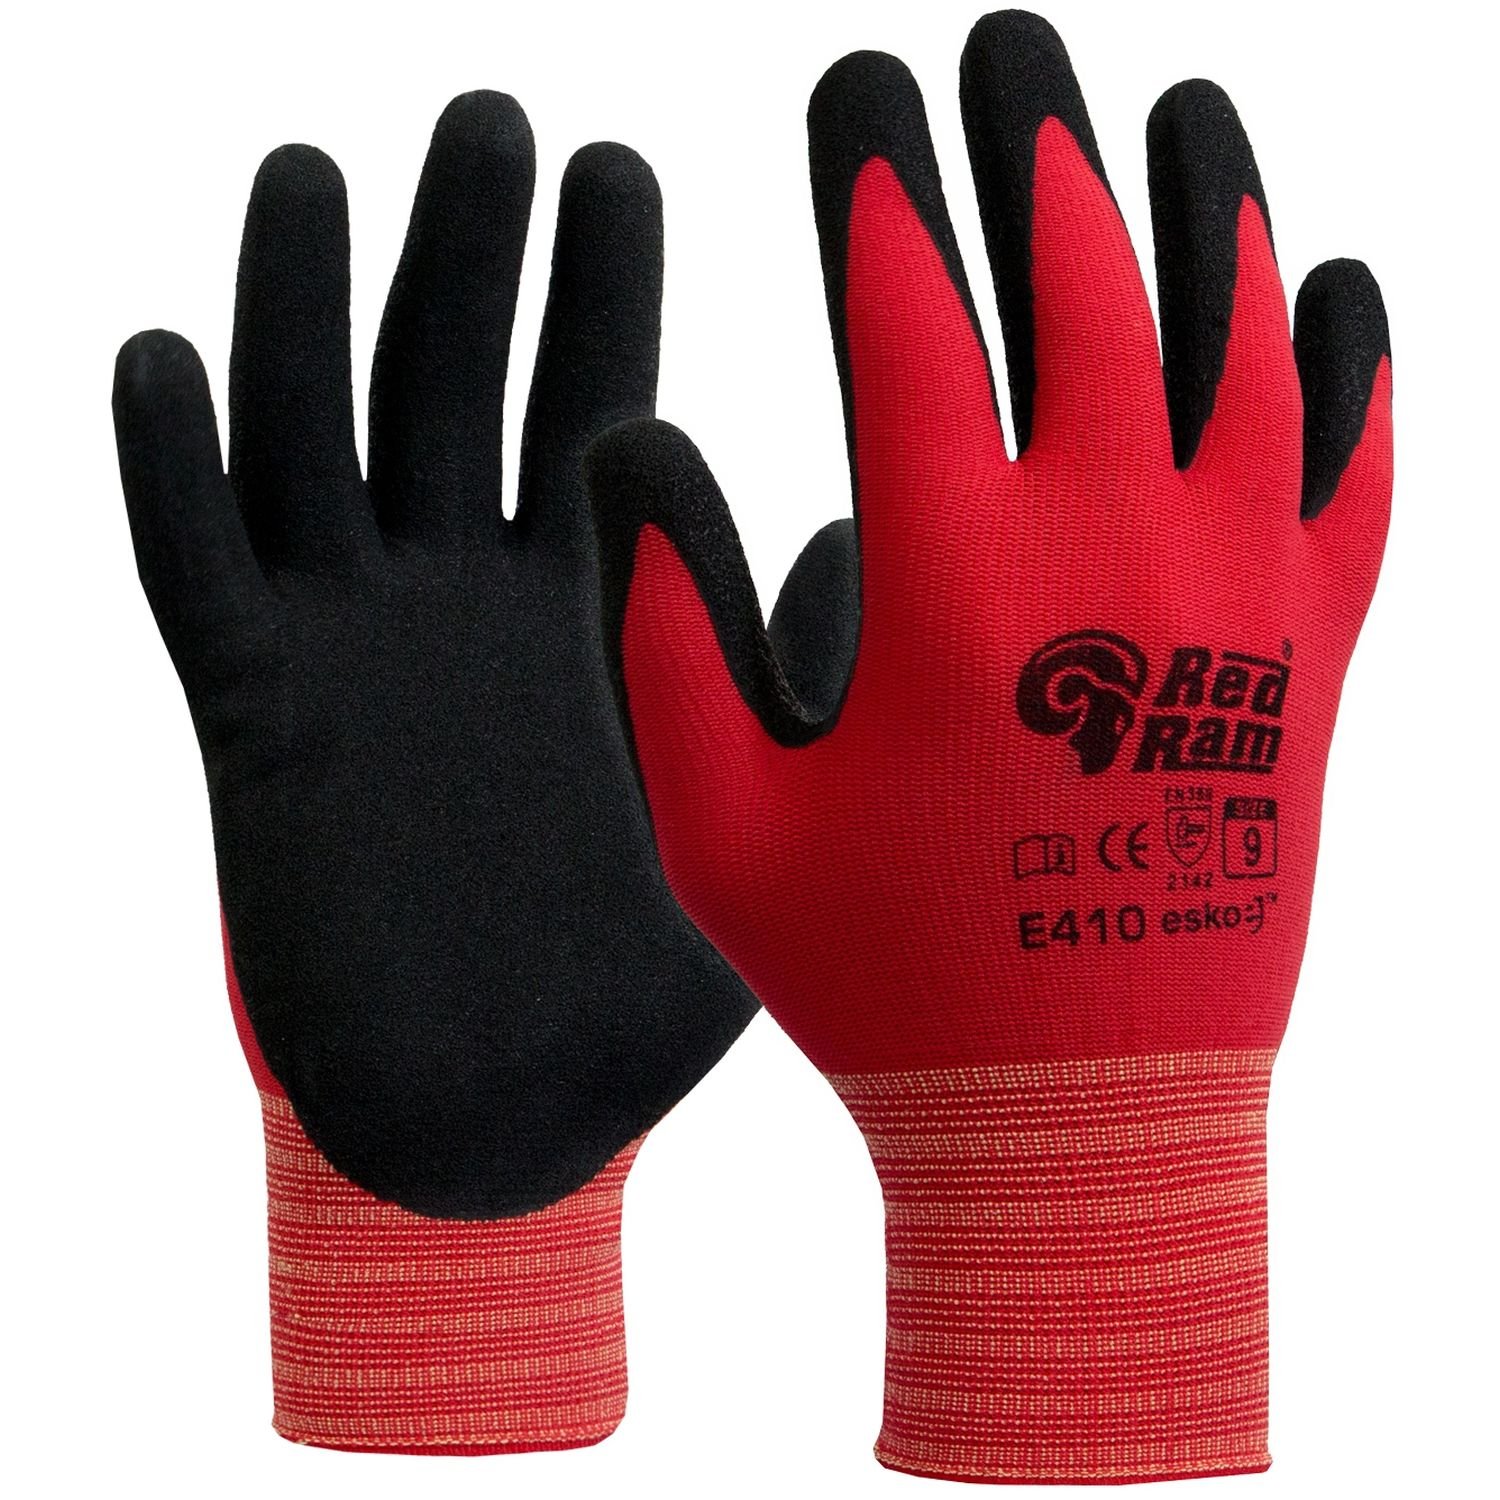 E410 Red Ram Sandy Latex Palm Coat Glove Red/Black (Pkt 12)